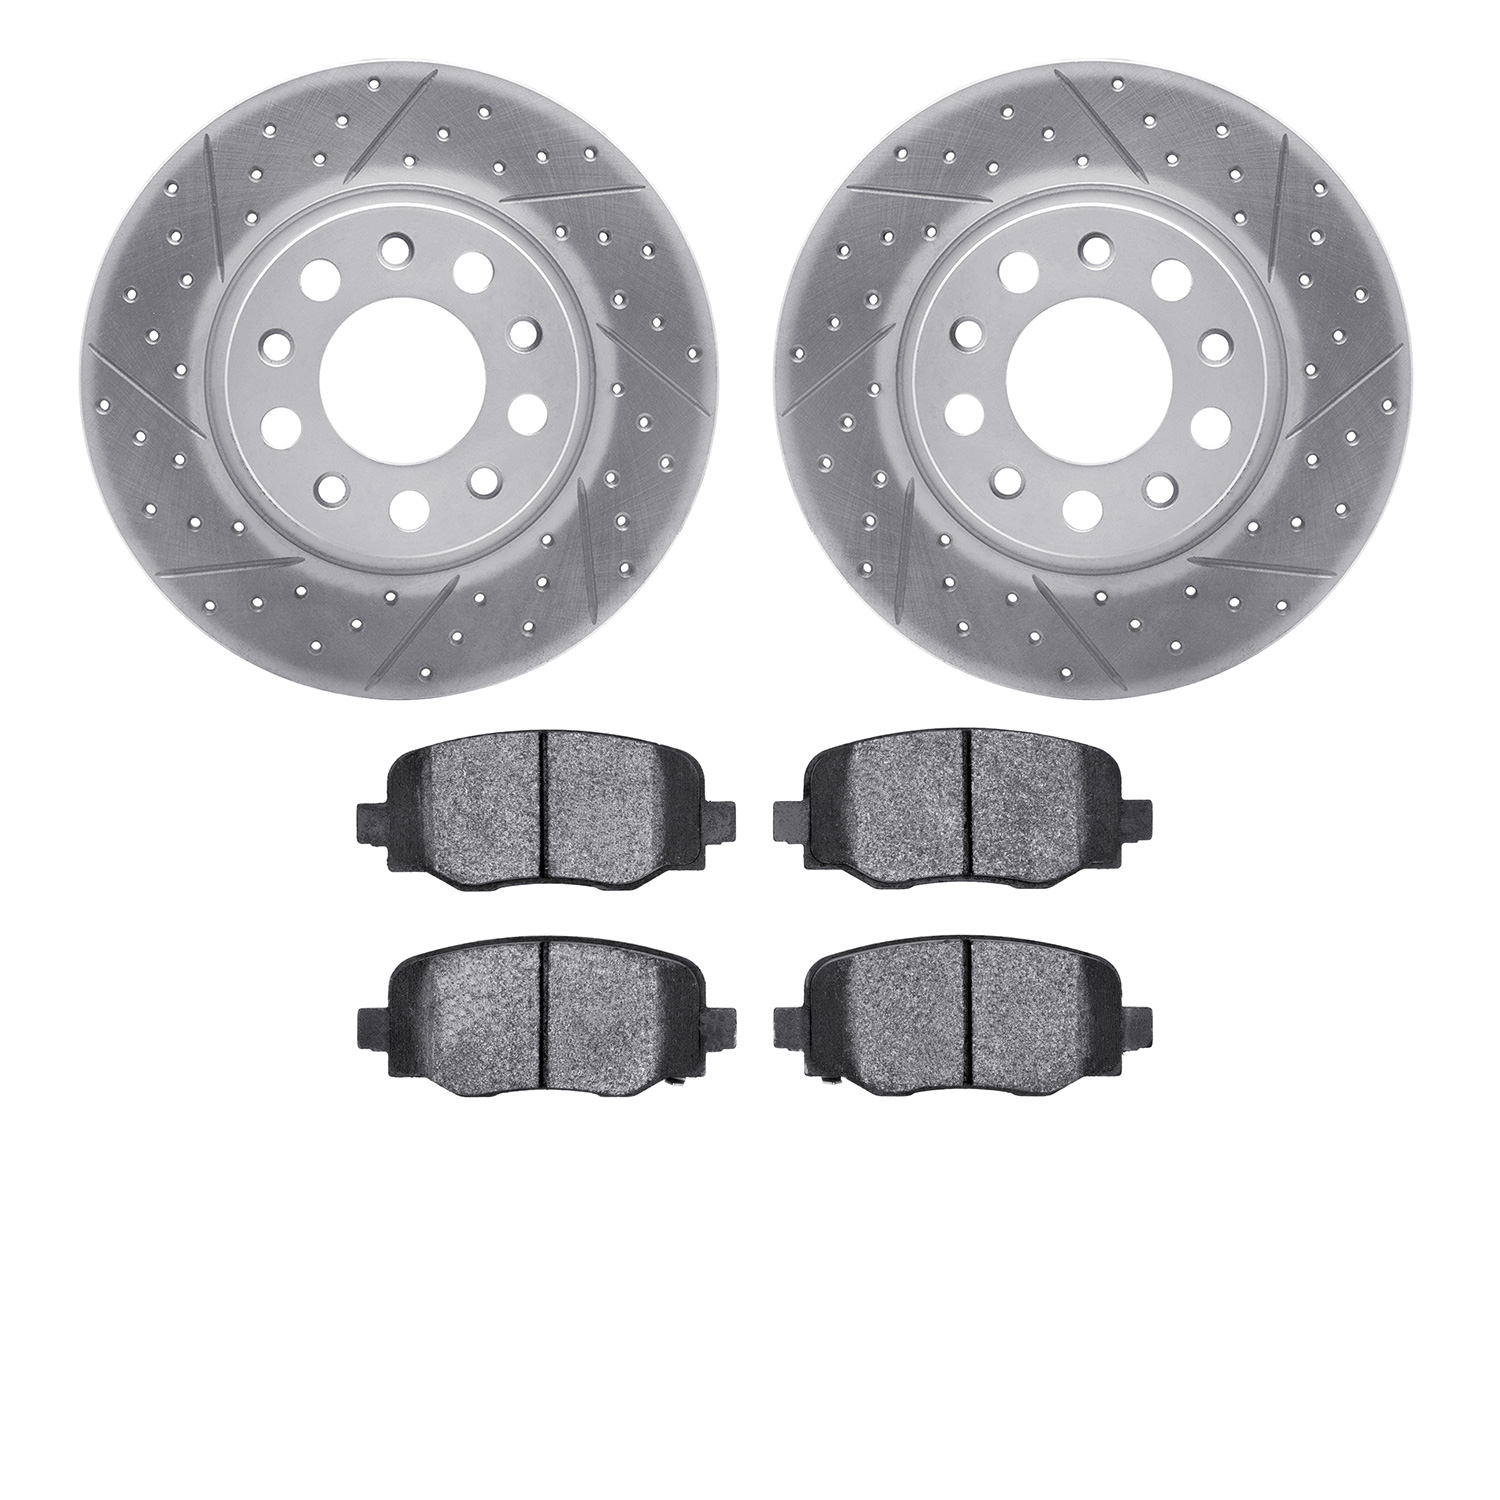 2602-42024 Geoperformance Drilled/Slotted Rotors w/5000 Euro Ceramic Brake Pads Kit, Fits Select Mopar, Position: Rear